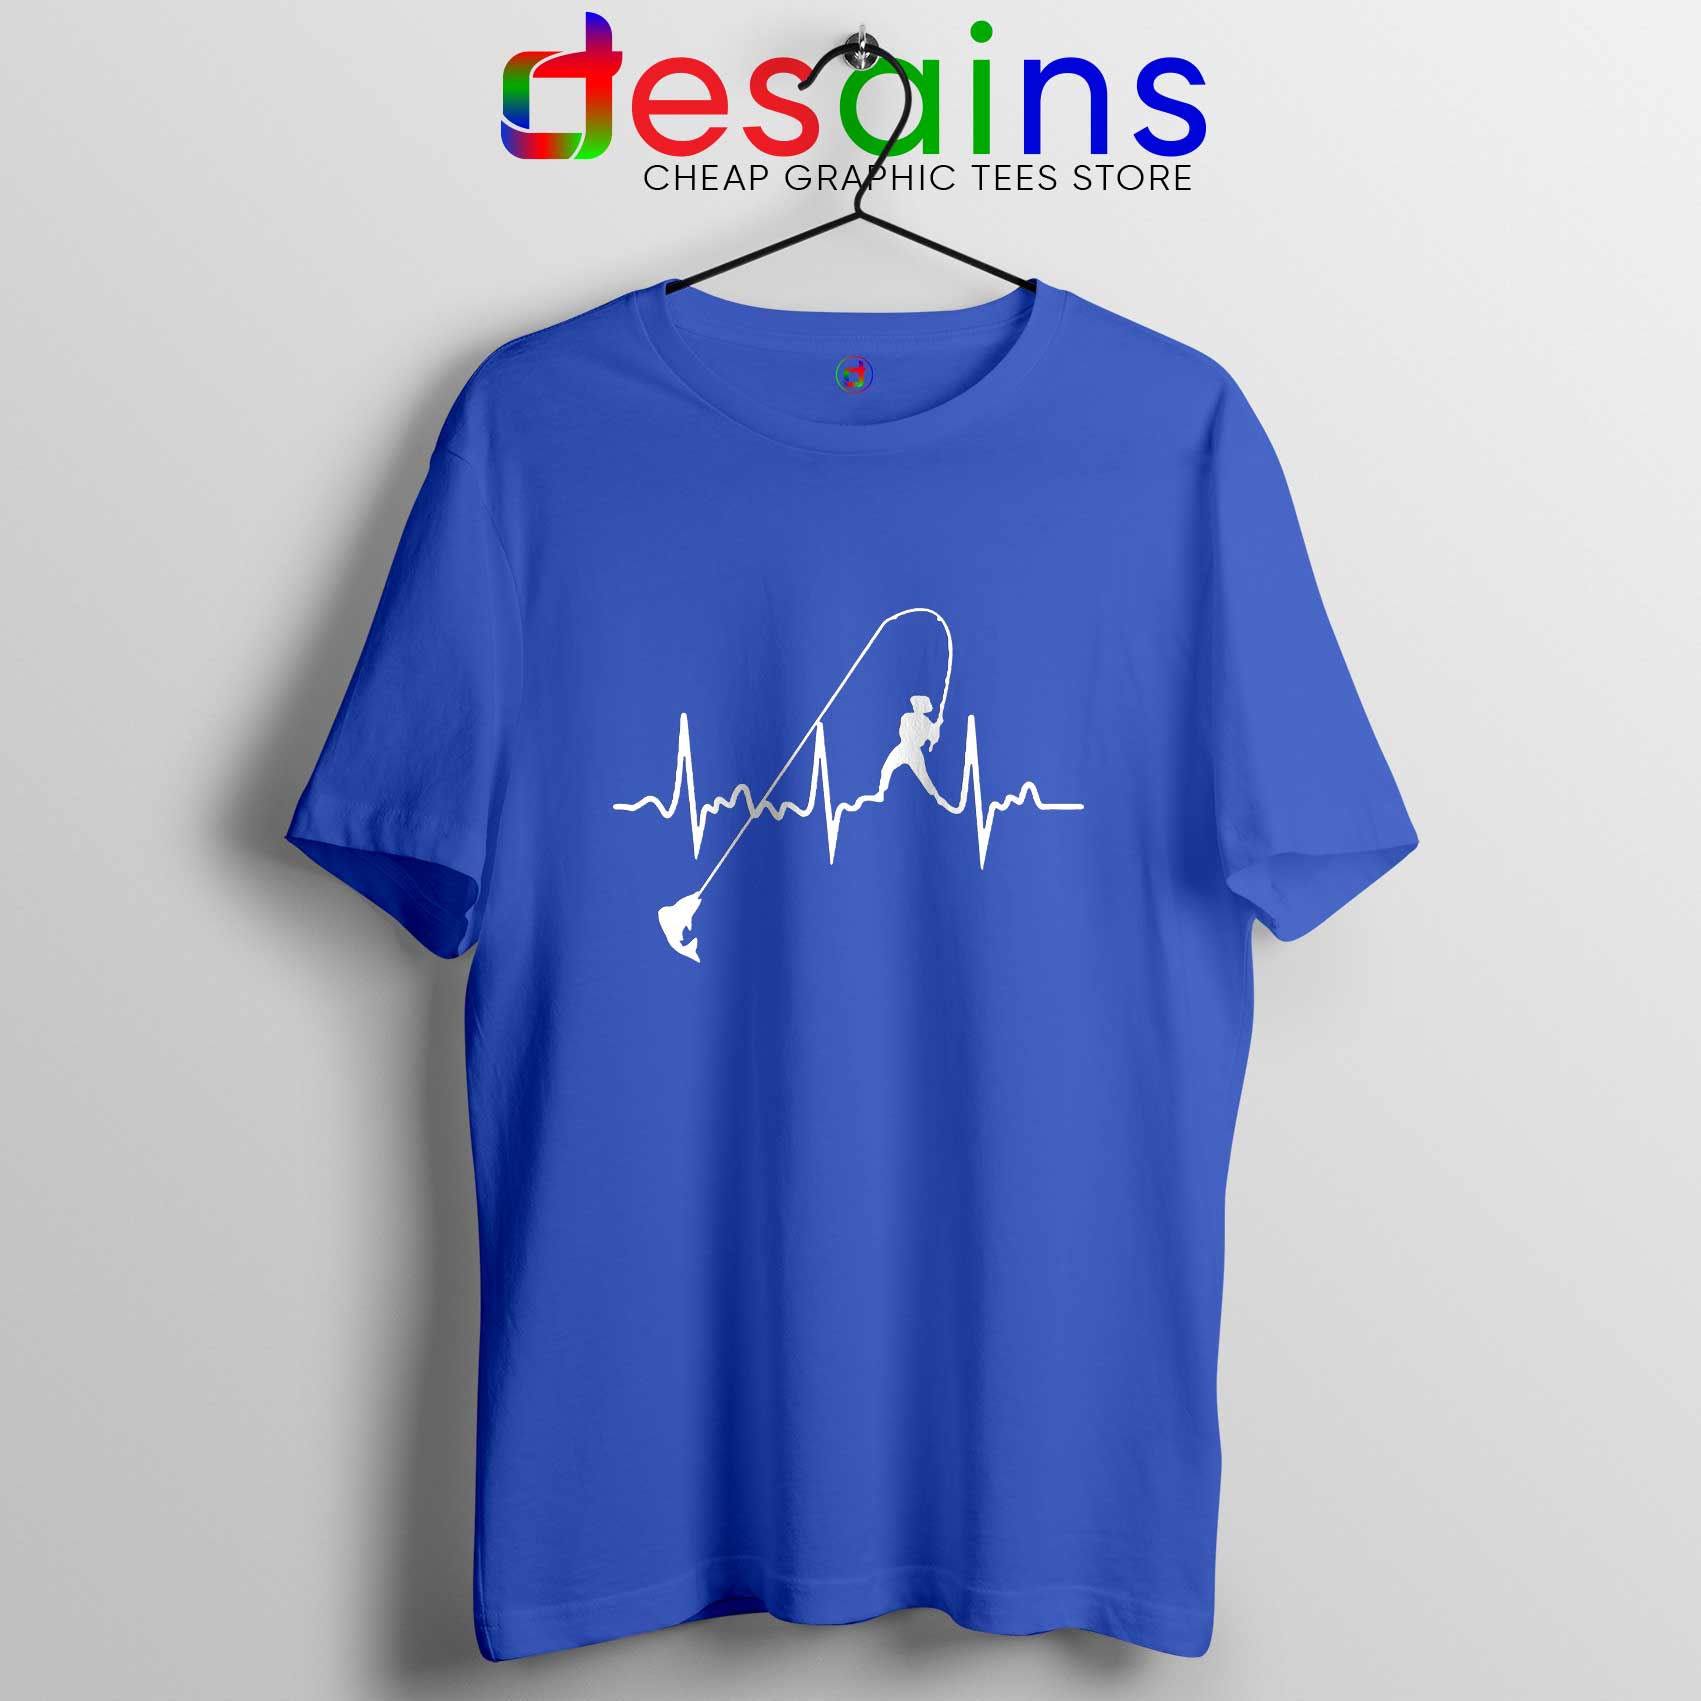 https://www.desains.com/wp-content/uploads/2019/08/Fishing-Heartbeat-Blue-Tshirt-Cheap-Fishing-Graphic-Tees-Shirts.jpg